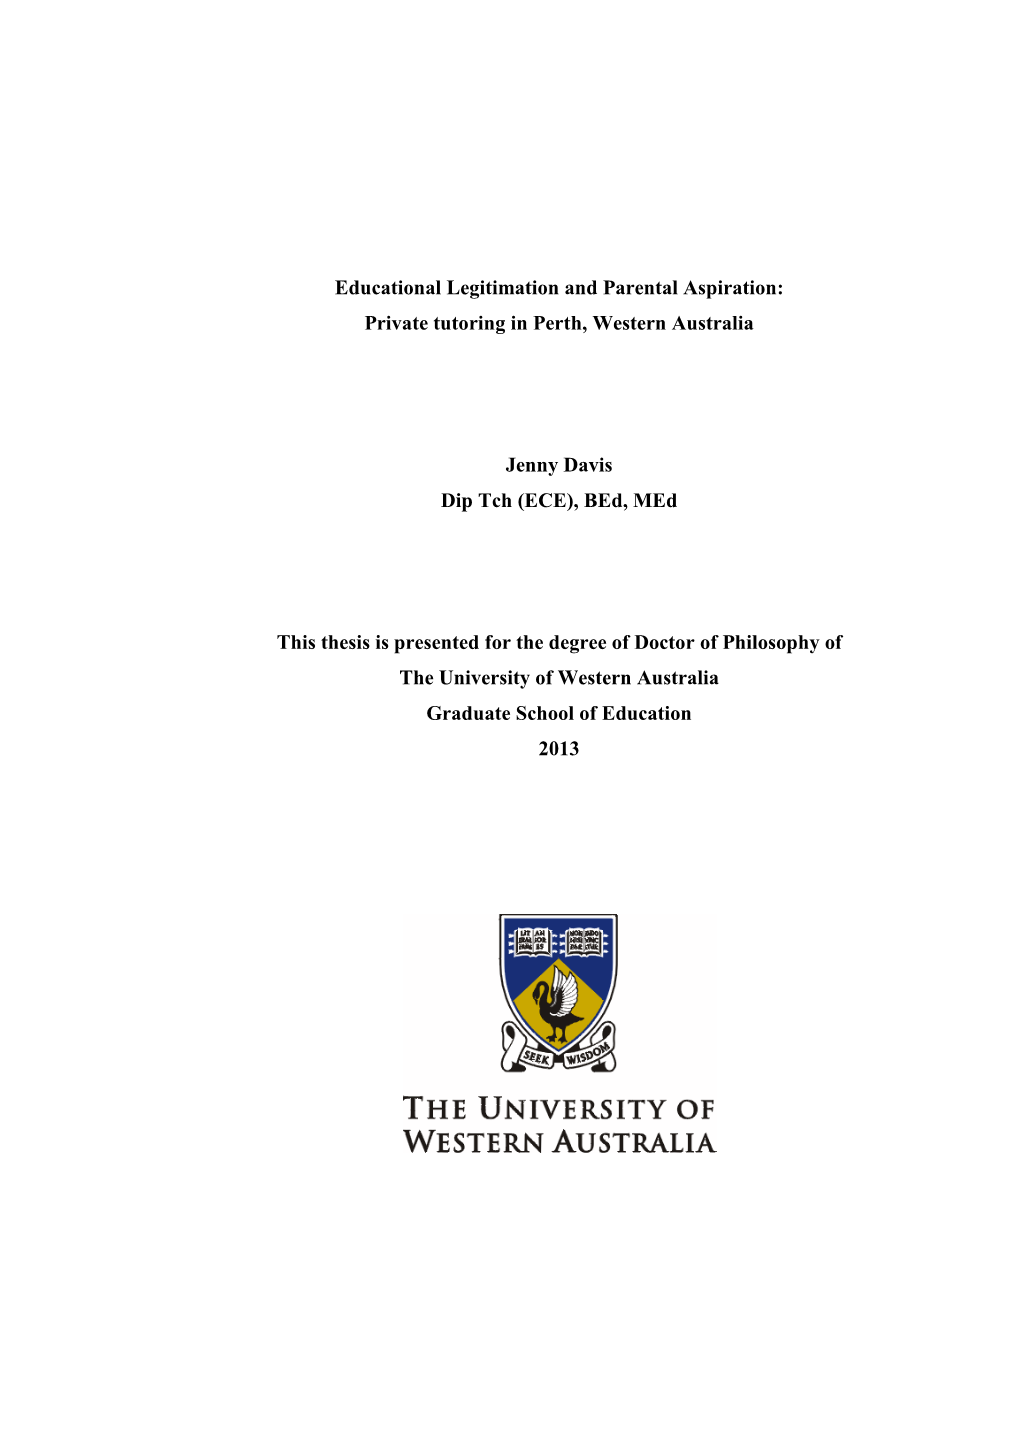 Educational Legitimation and Parental Aspiration: Private Tutoring in Perth, Western Australia